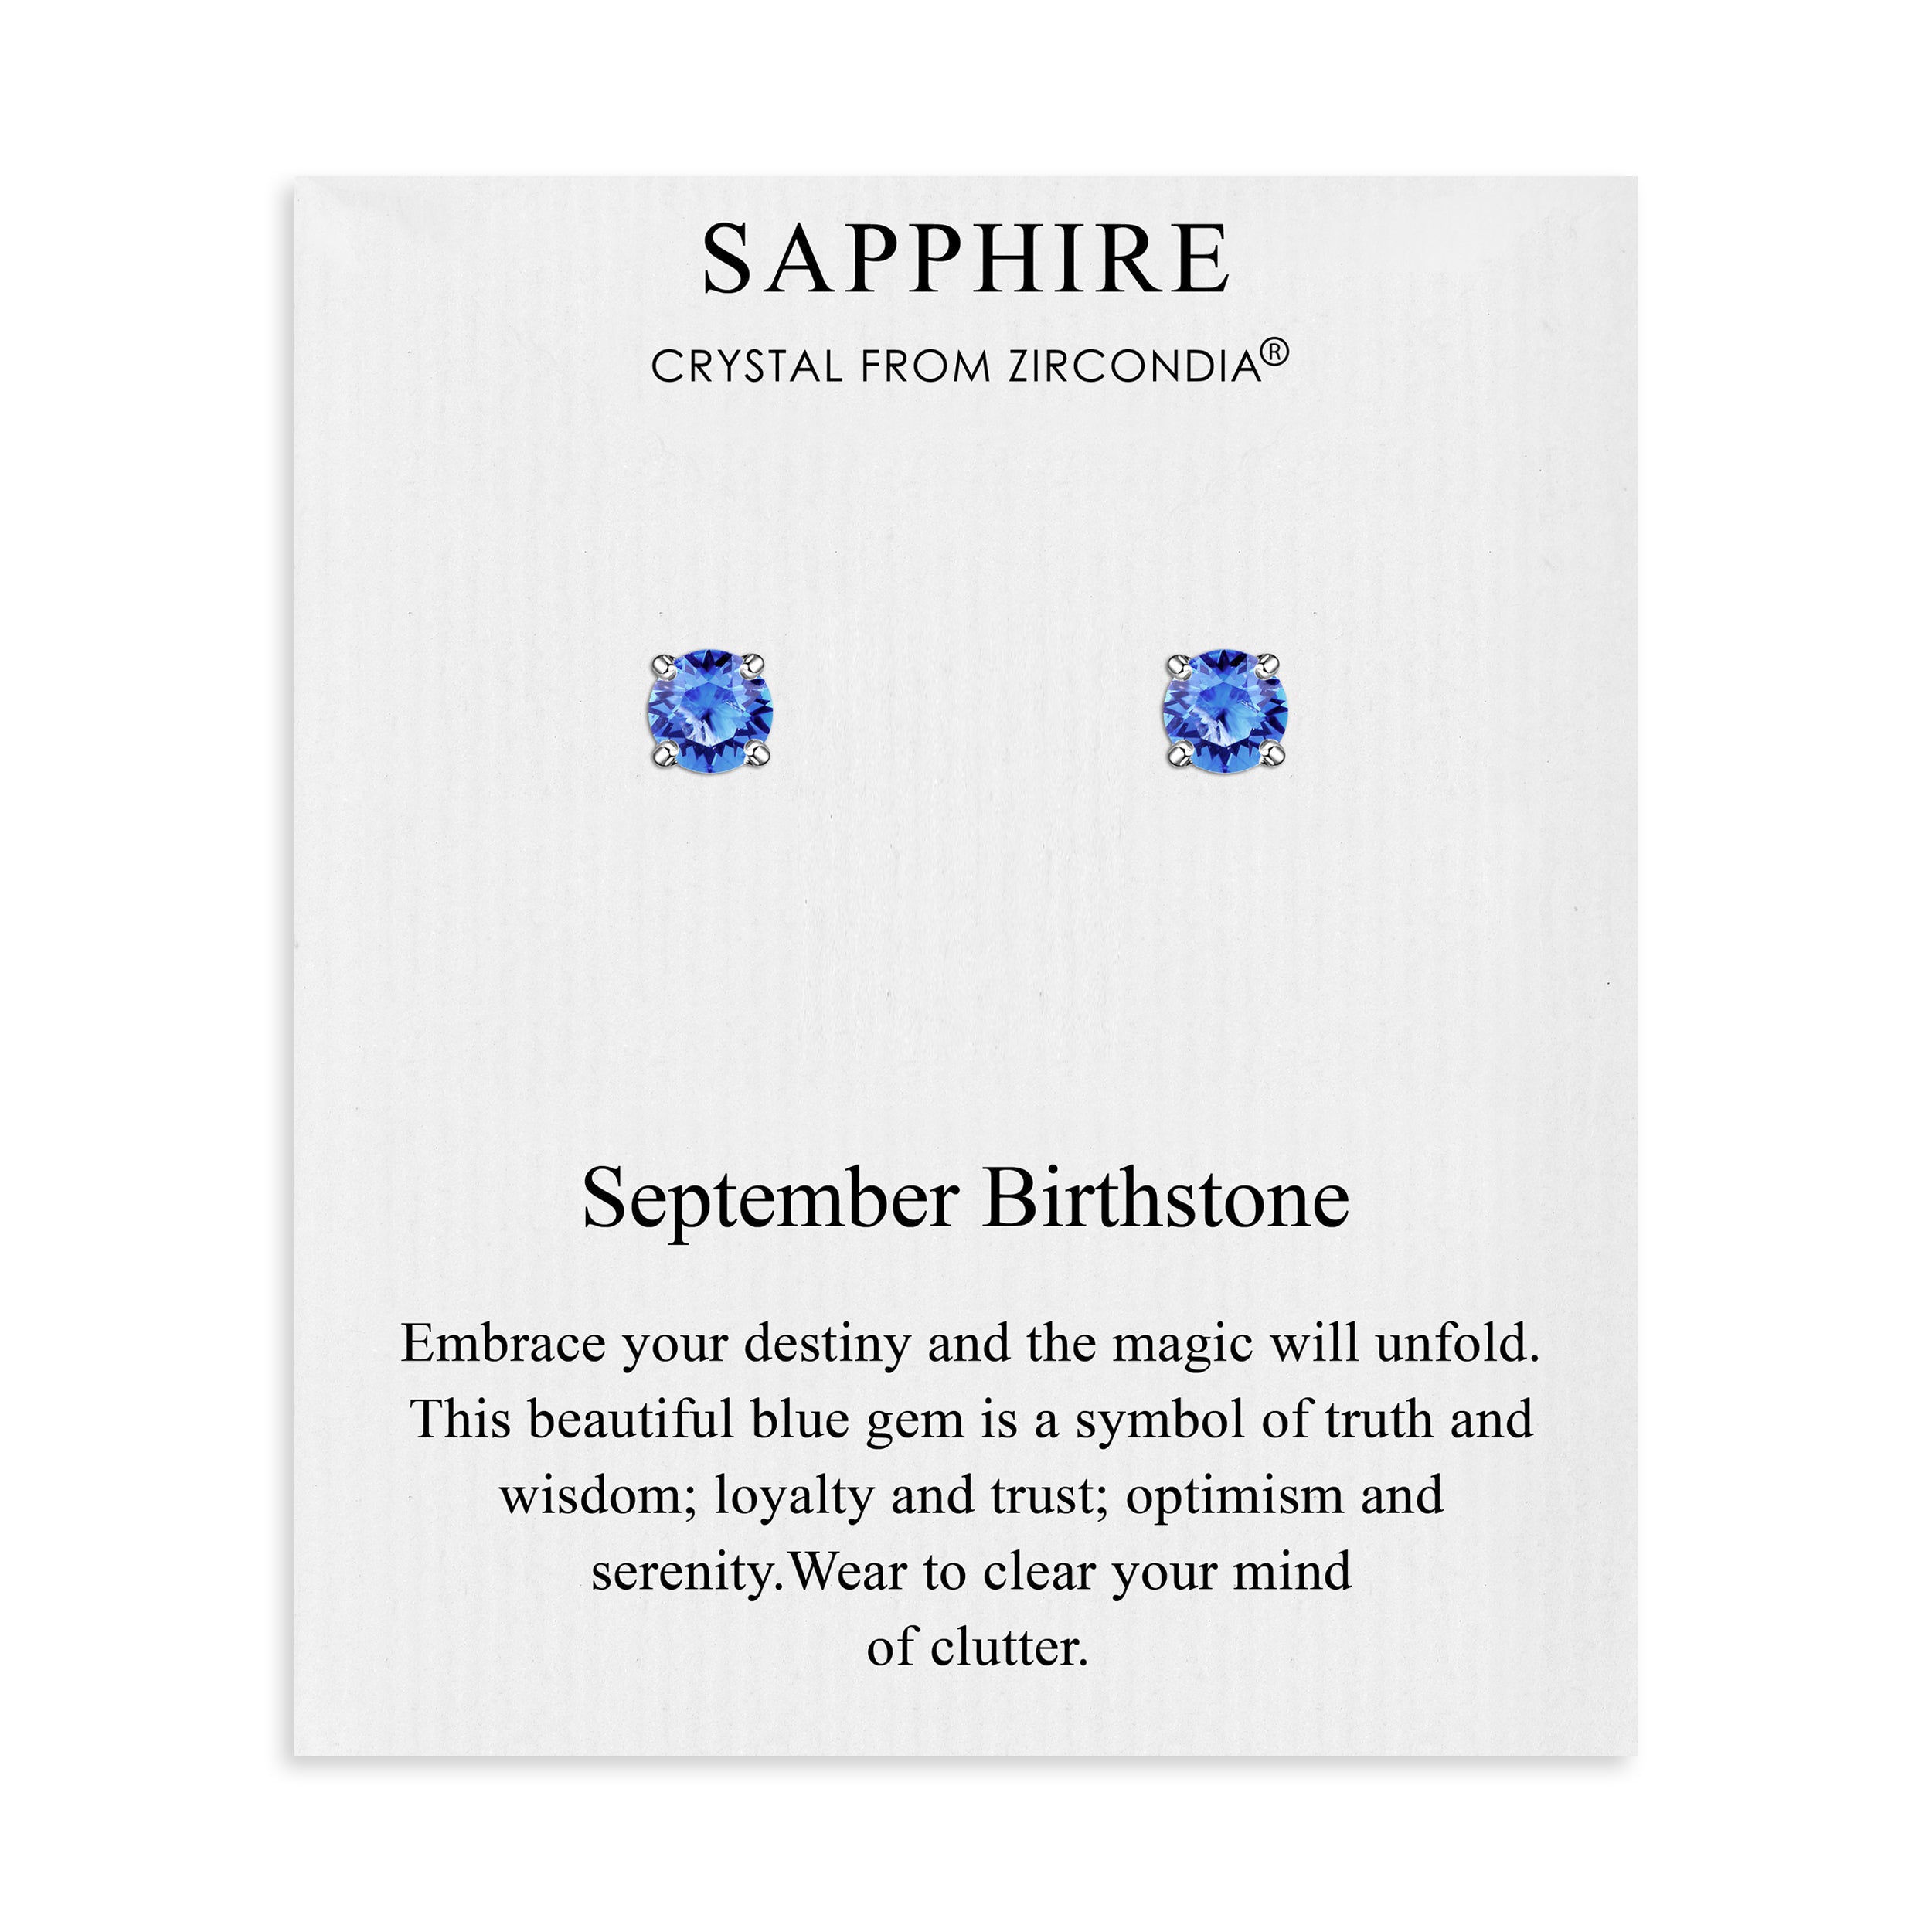 September (Sapphire) Birthstone Earrings Created with Zircondia® Crystals by Philip Jones Jewellery